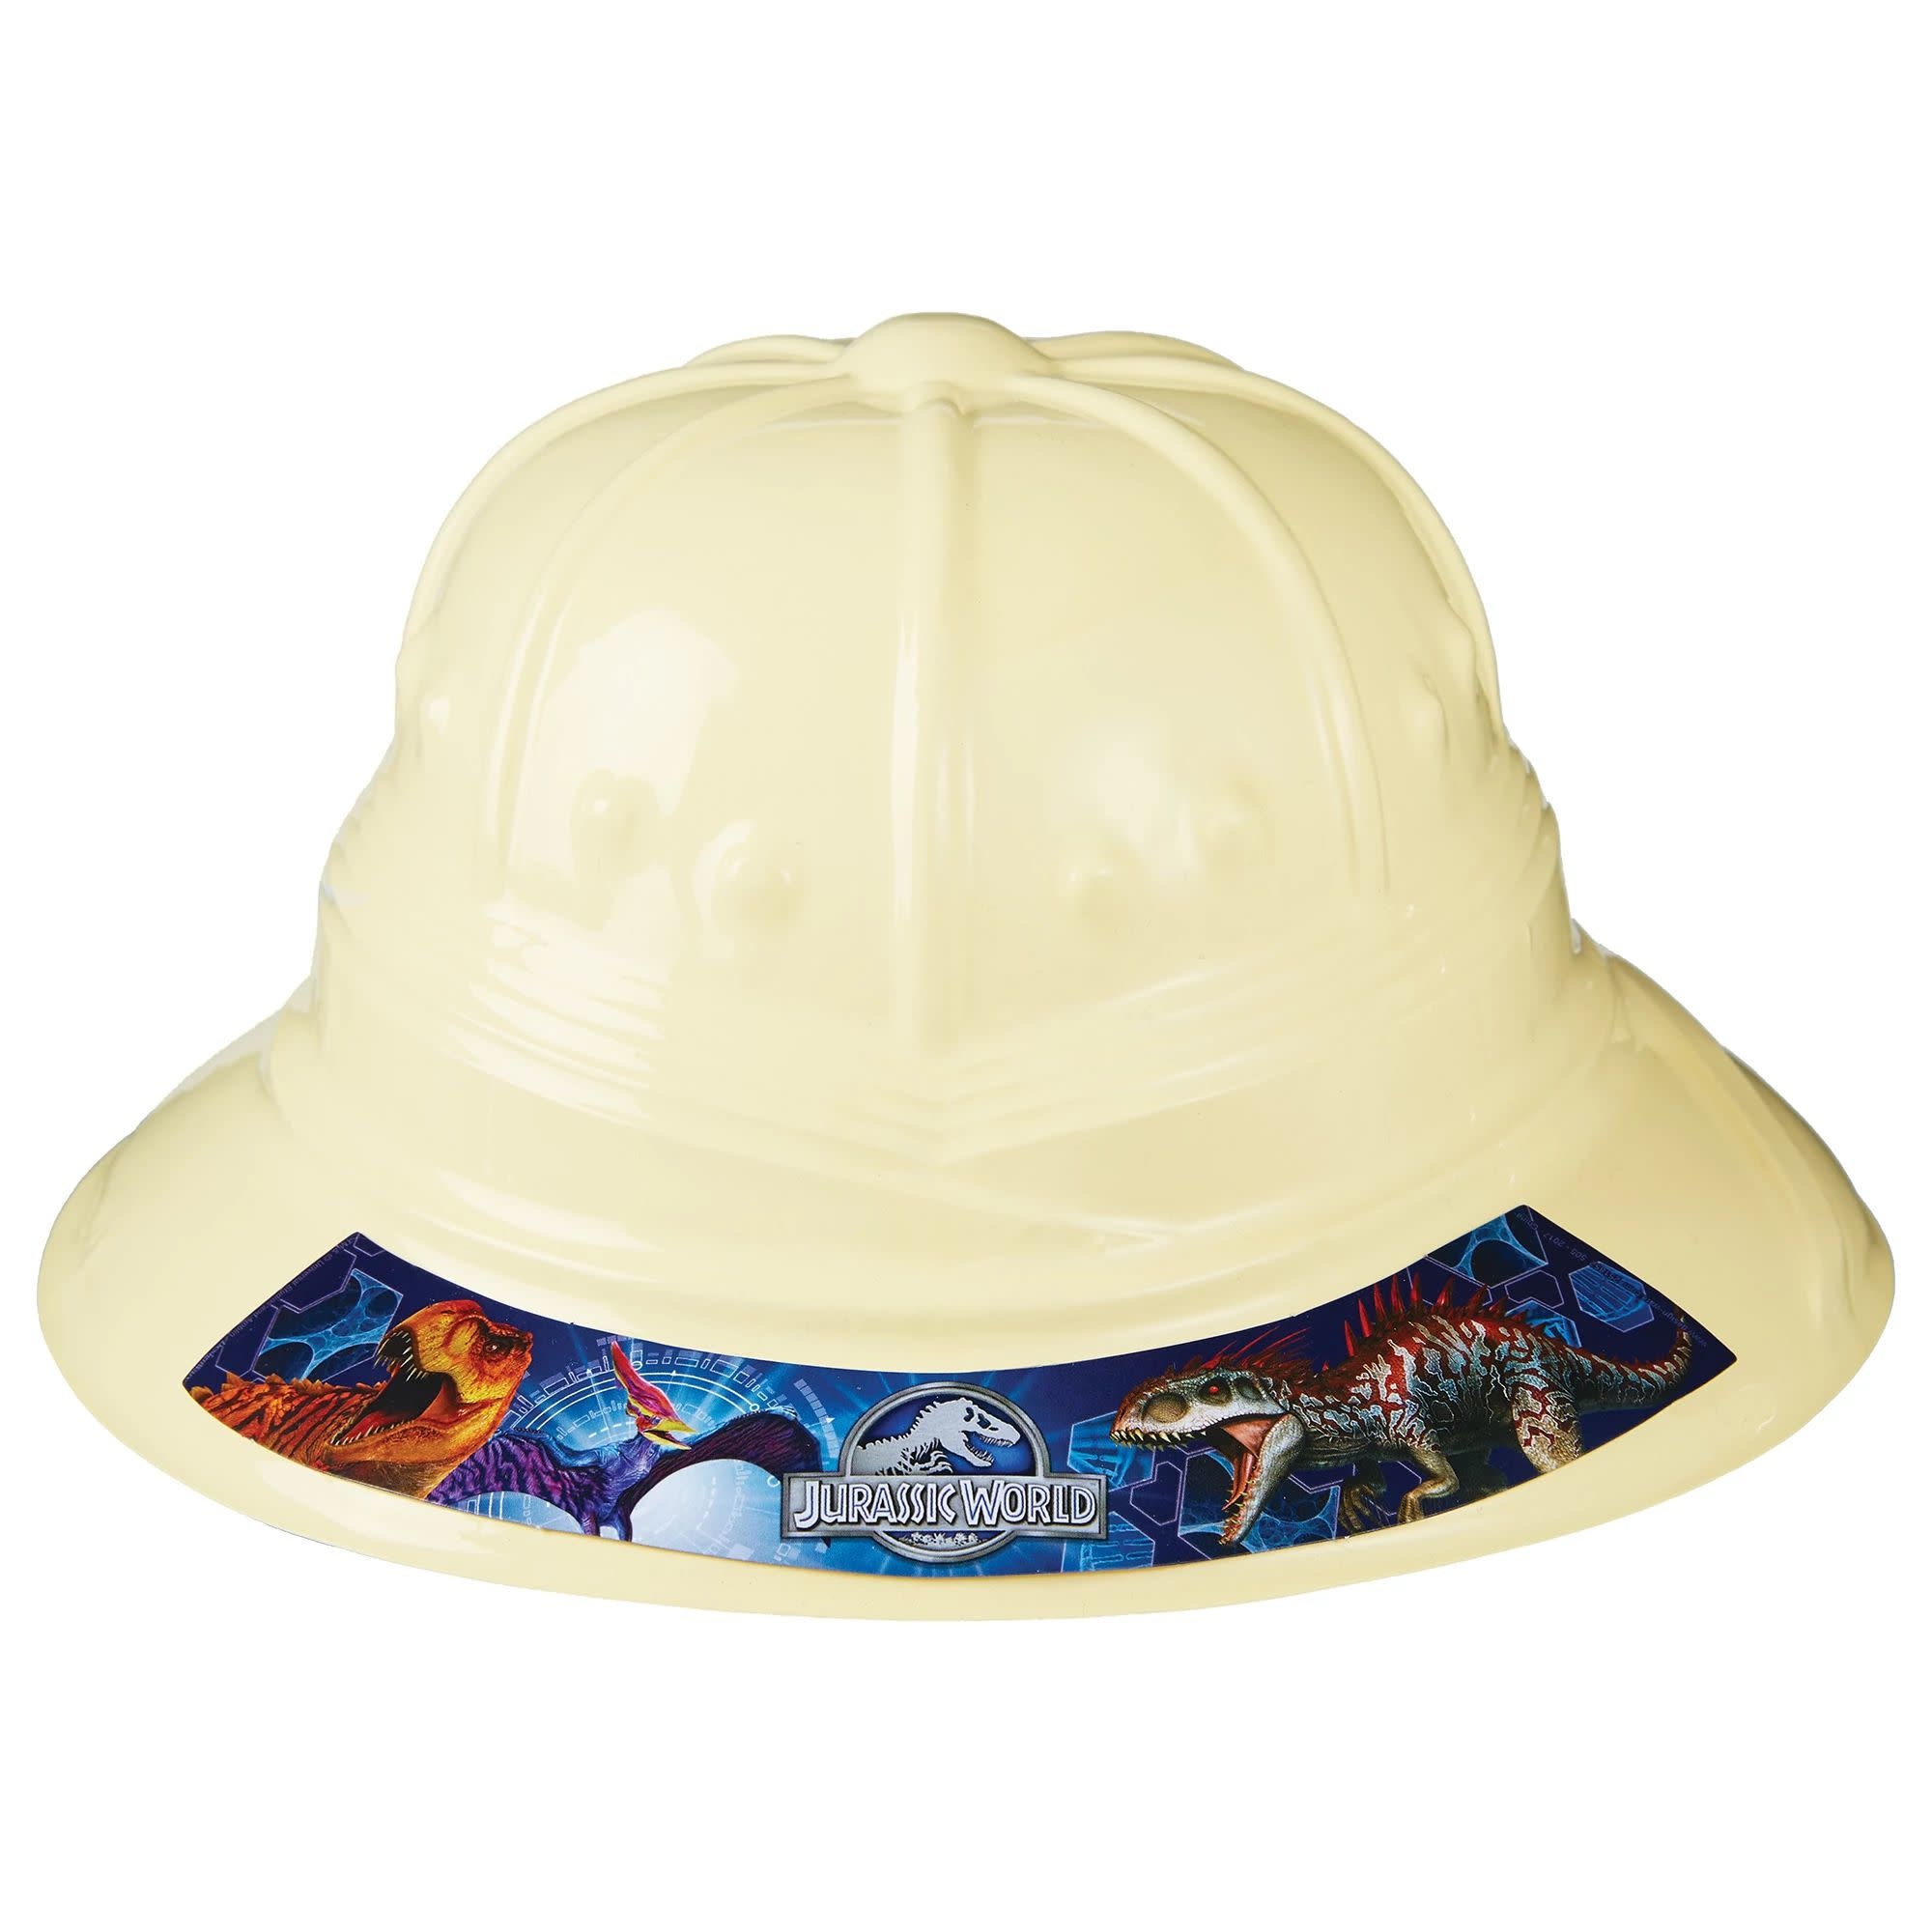 Amscan Construction Hat, Yellow